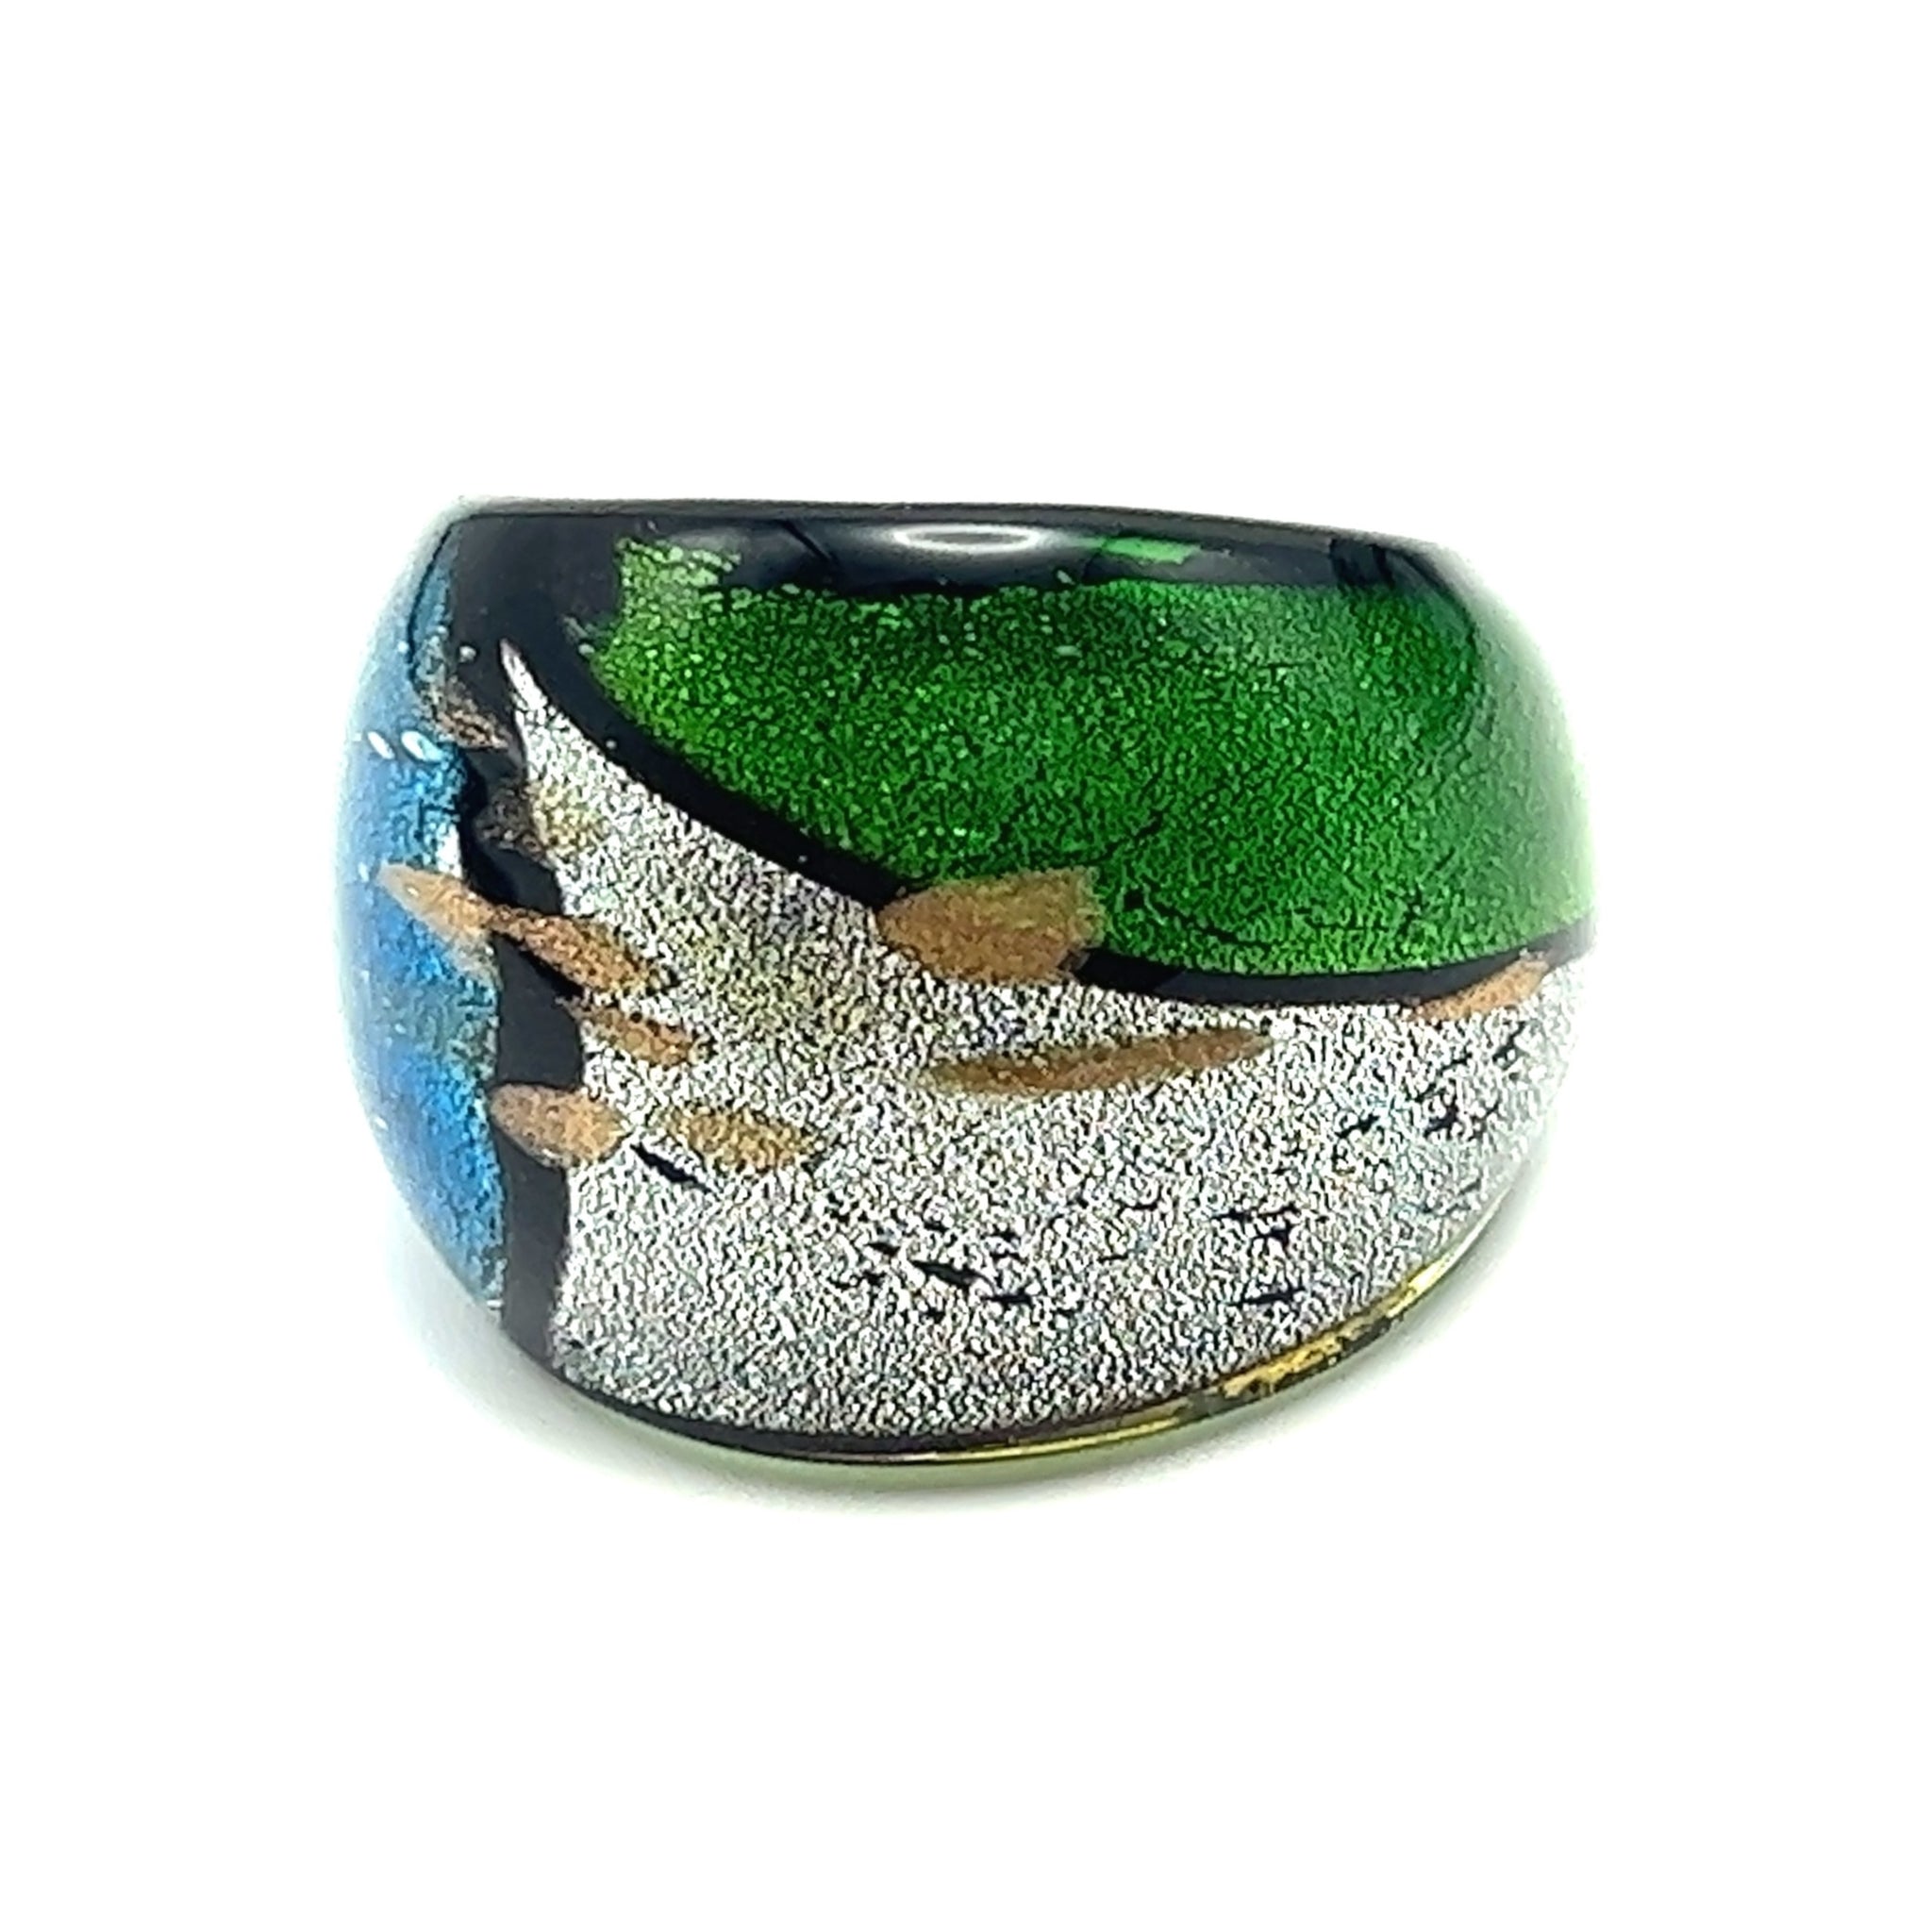 Handmade Glass Acrylic Ring Aqua's Radiance and Artistry Infinity Band